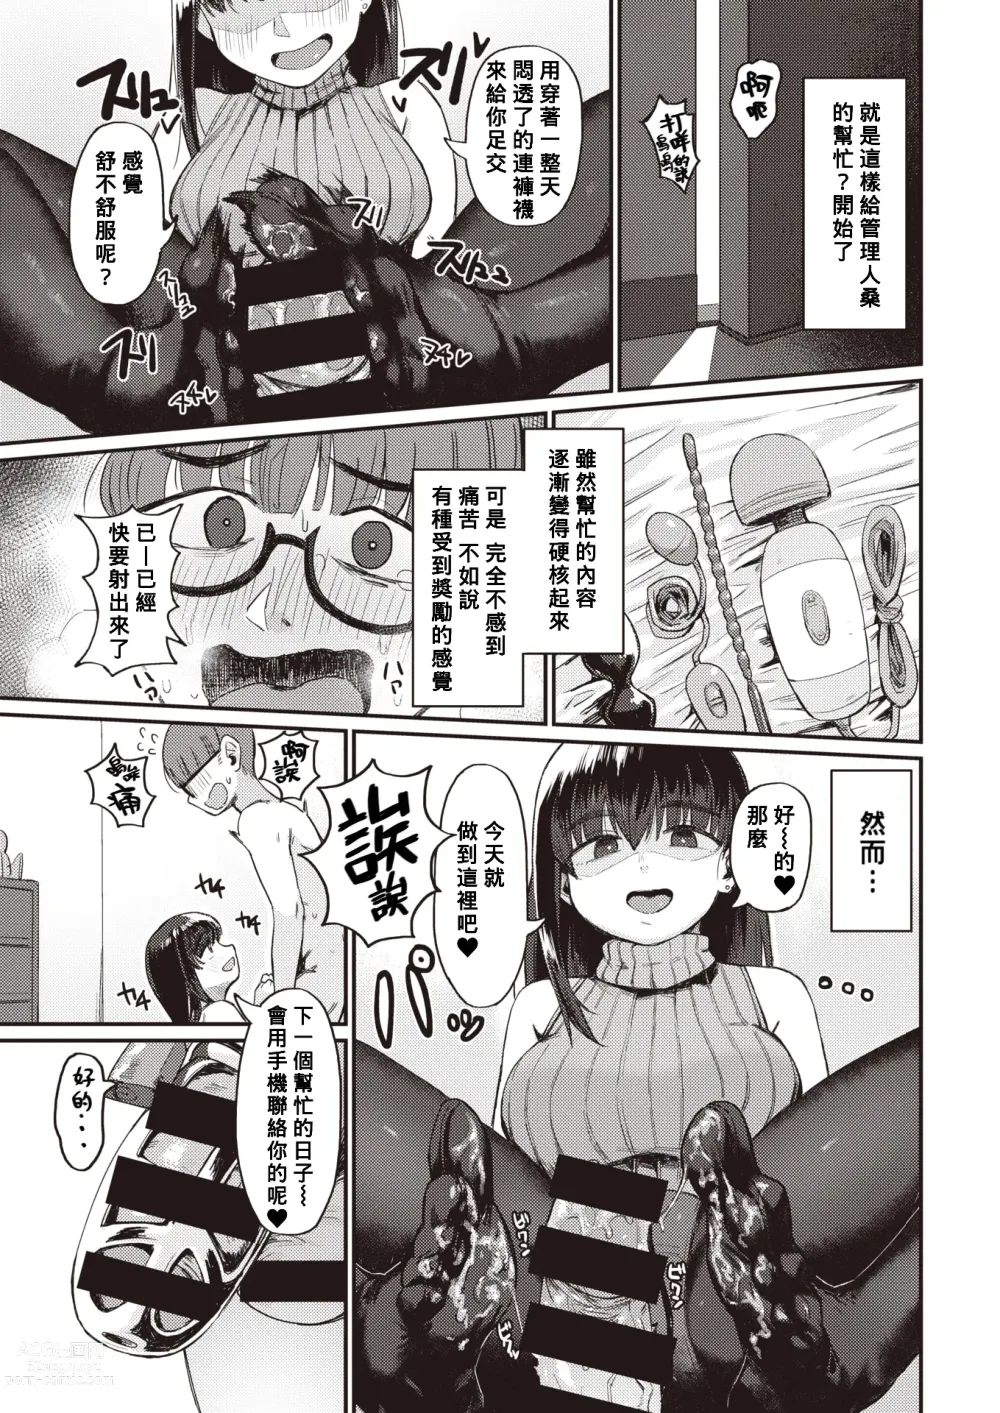 Page 13 of manga Yachin no Himitsu